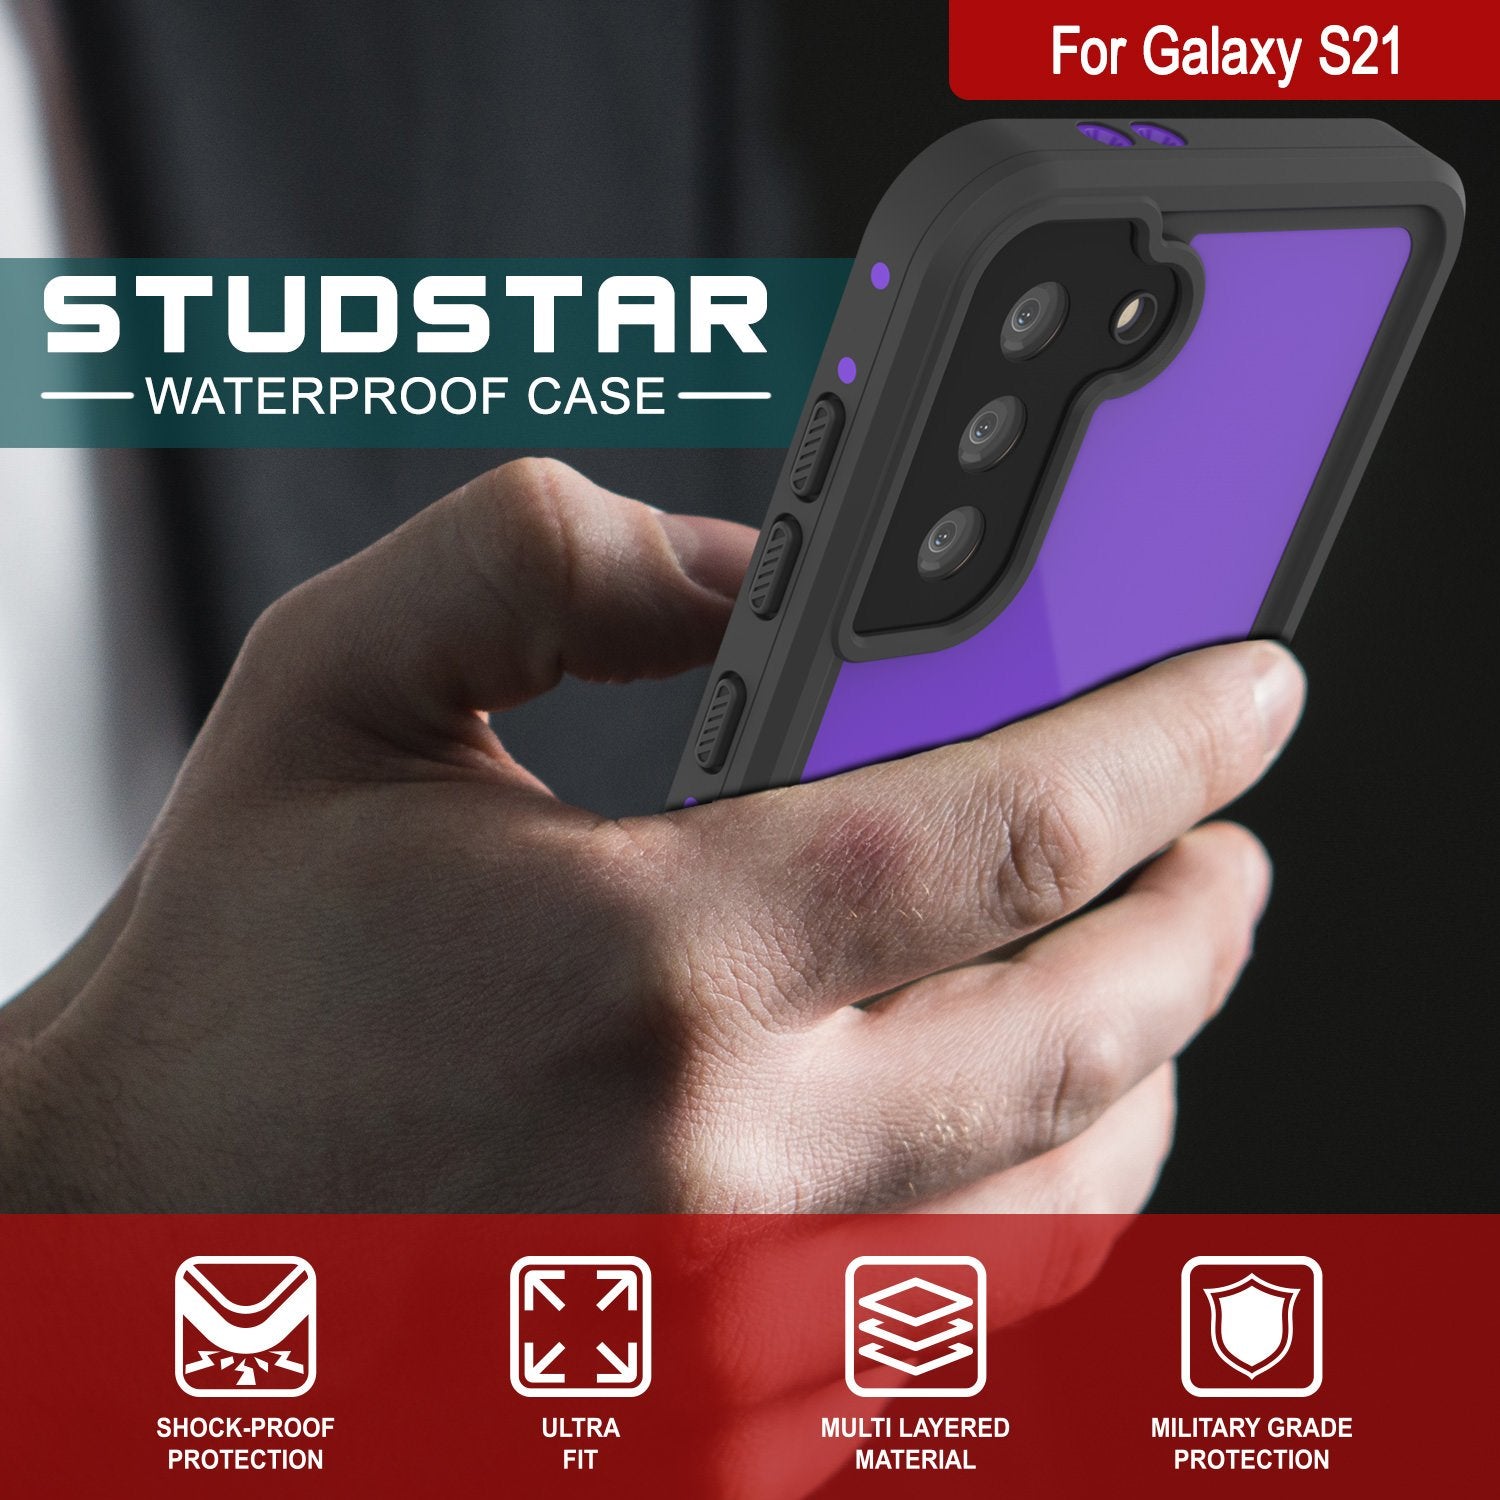 Galaxy S21 Waterproof Case PunkCase StudStar Purple Thin 6.6ft Underwater IP68 Shock/Snow Proof